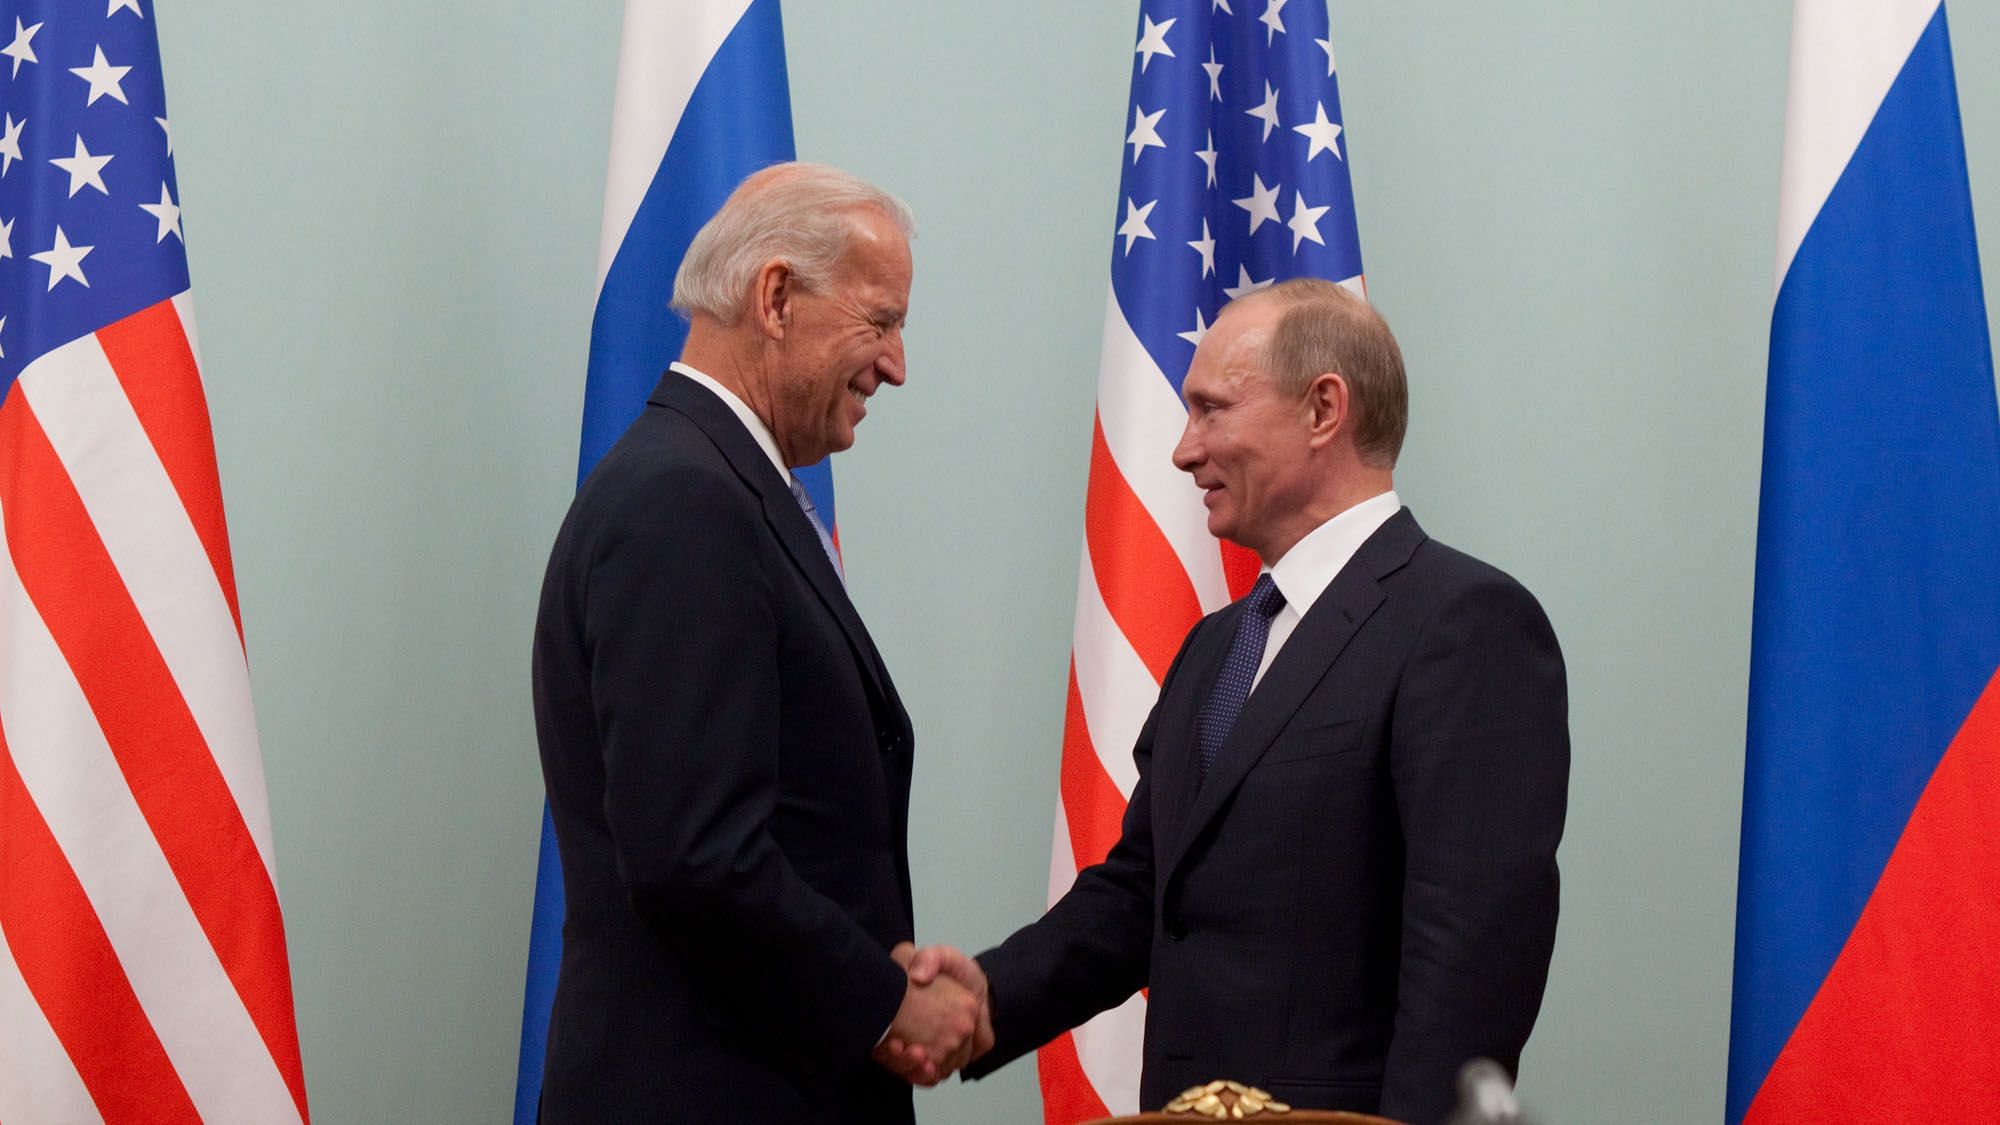 <div class="paragraphs"><p>File photo of Joe Biden with Vladimir Putin from 2011.</p></div>